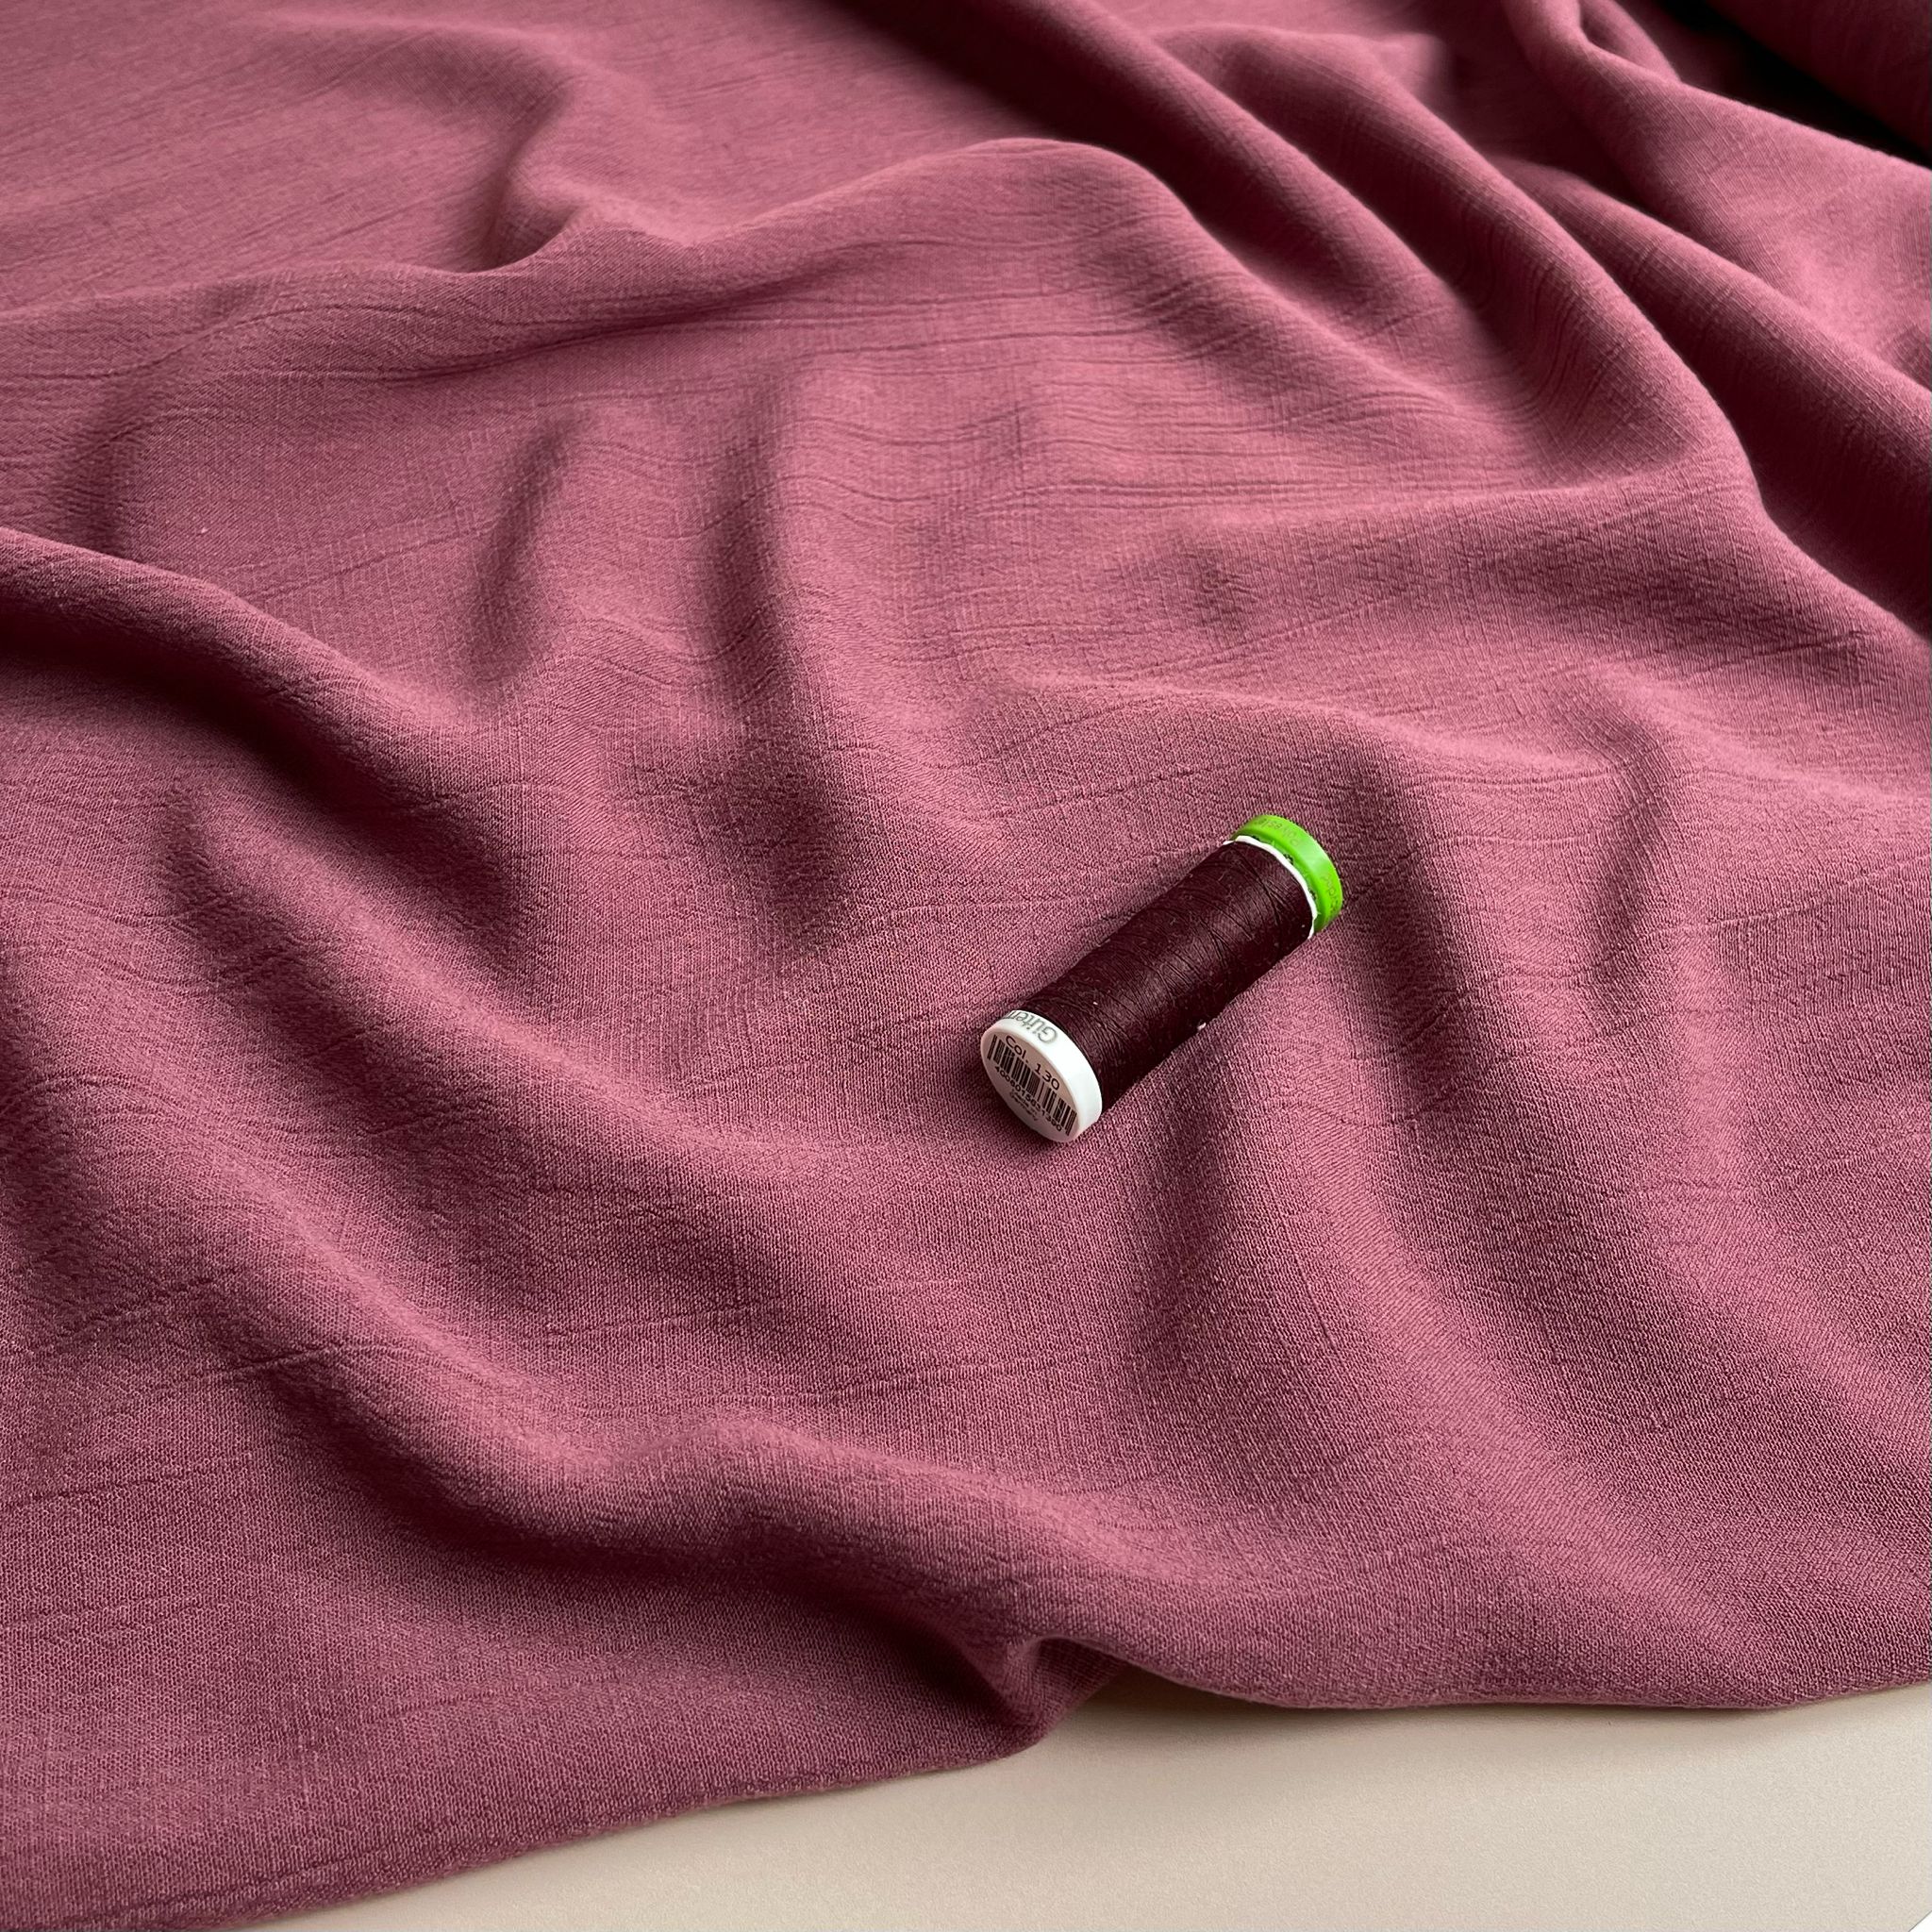 REMNANT 1.84 Metres - Crinkle Viscose Linen Blend Fabric in Burgundy